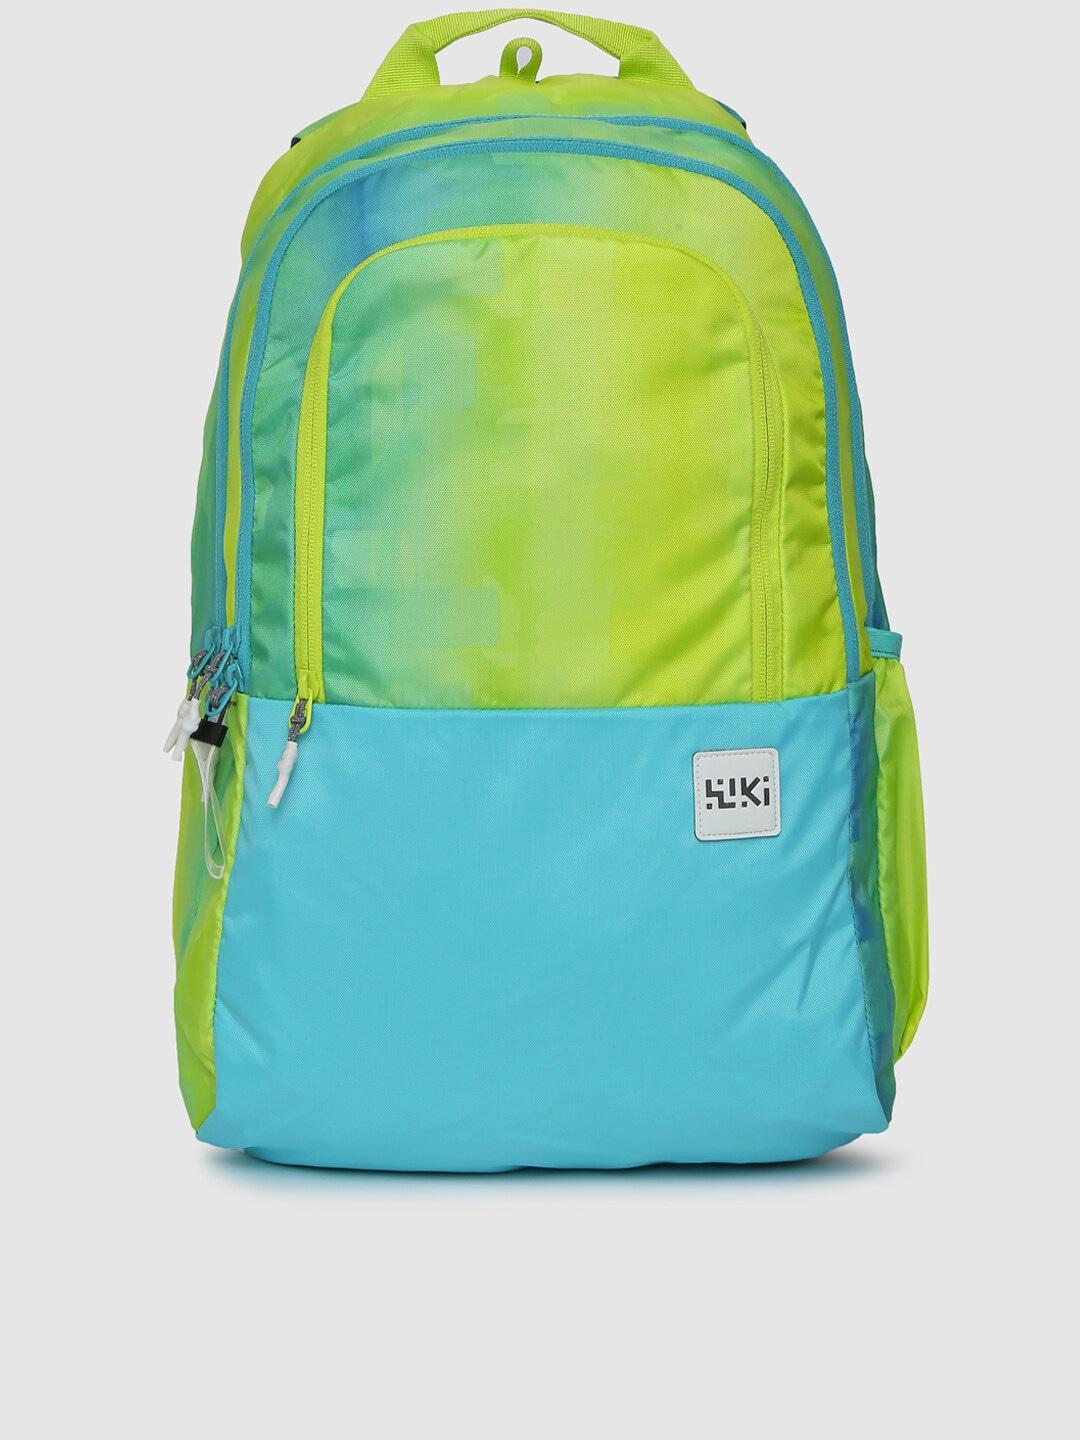 wildcraft-unisex-blue-&-green-colourblocked-backpack